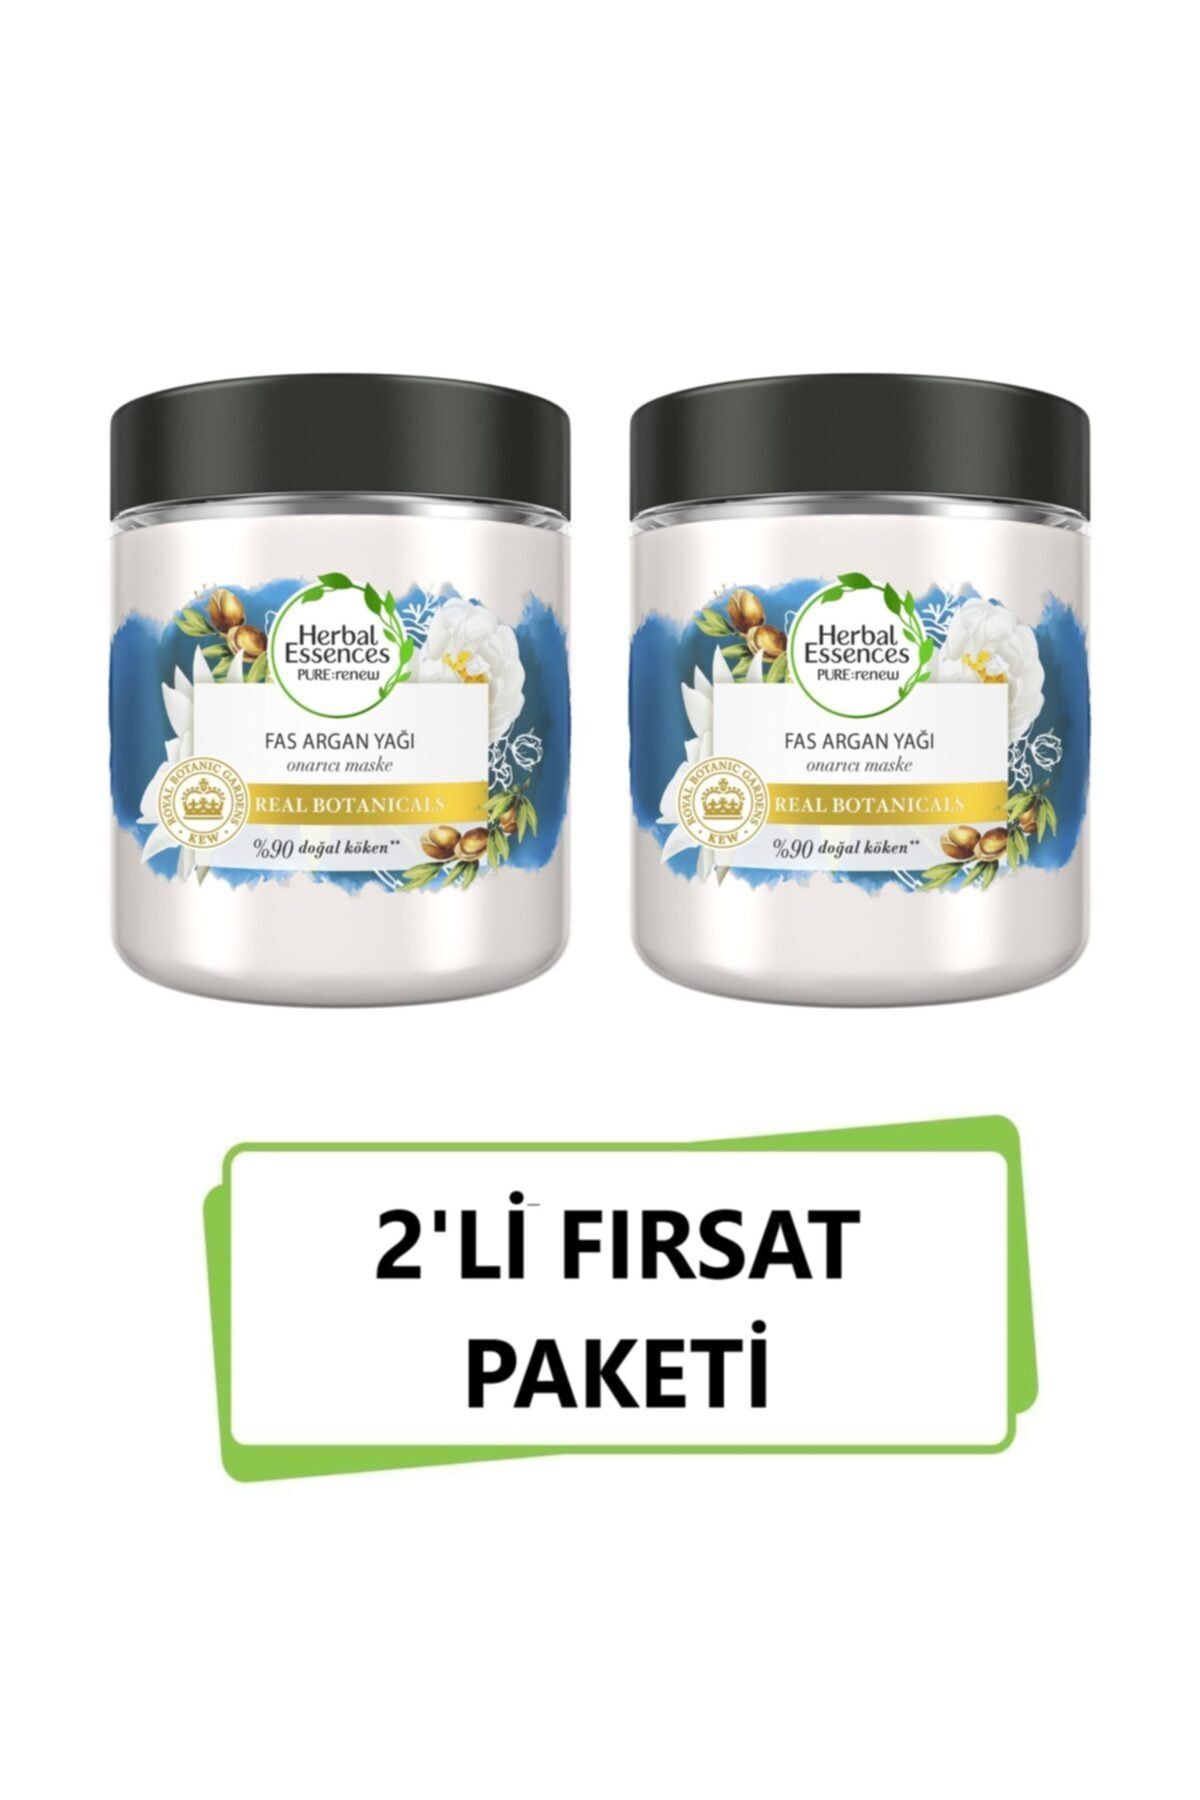 Herbal Essences 2'li Fırsat Paketi Fas Argan Yağı Onarıcı Maske 250ml